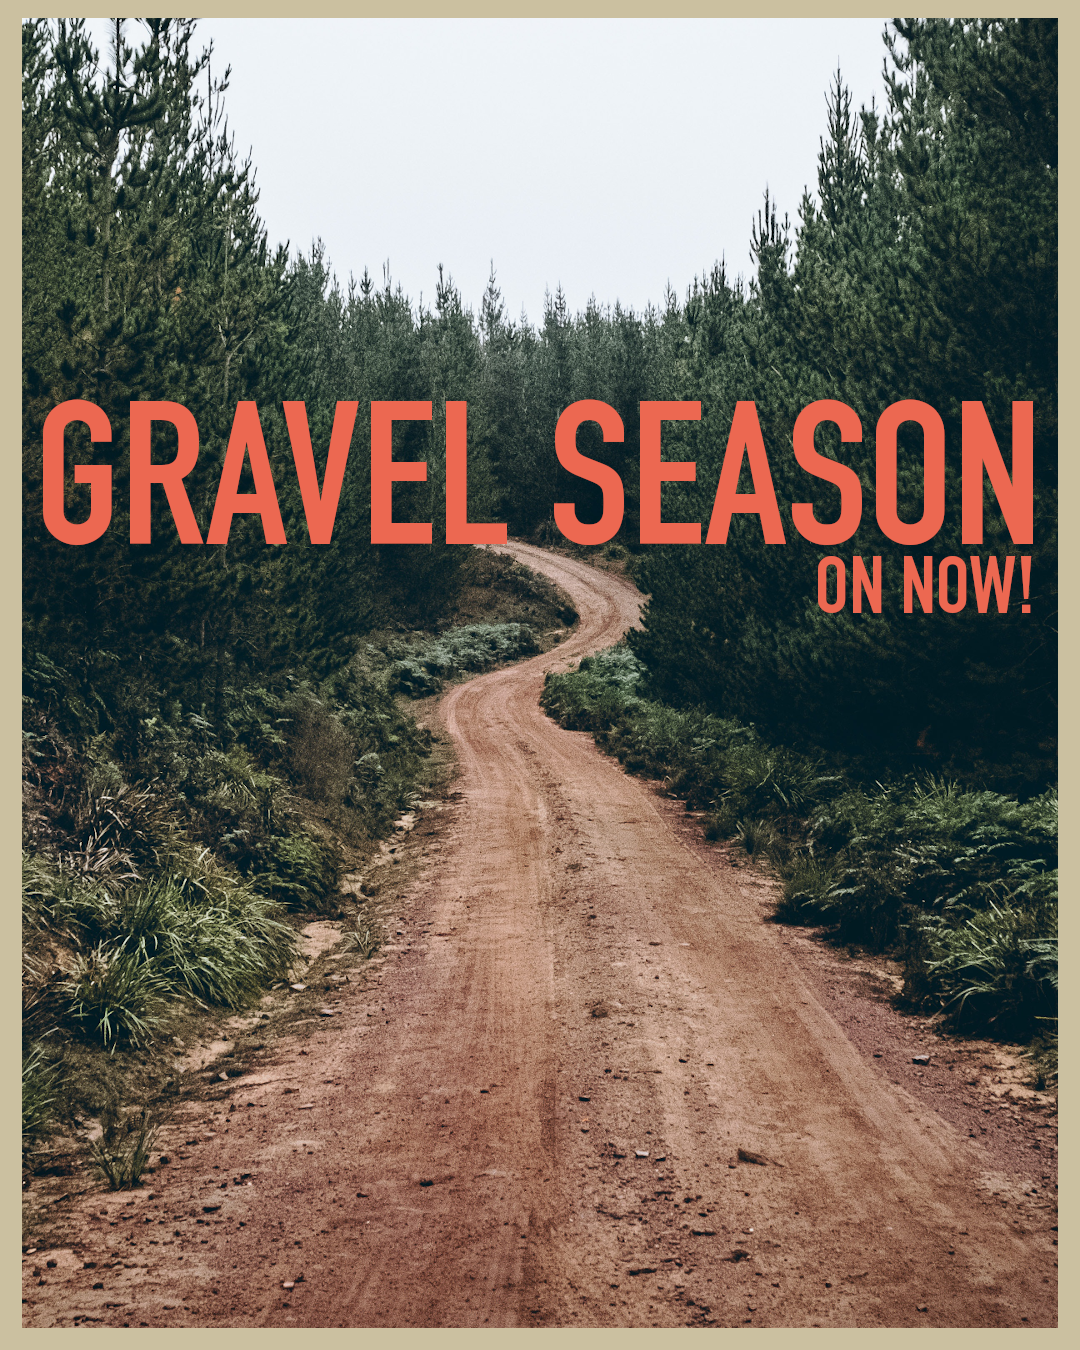 Gravel (sale) Season Is On